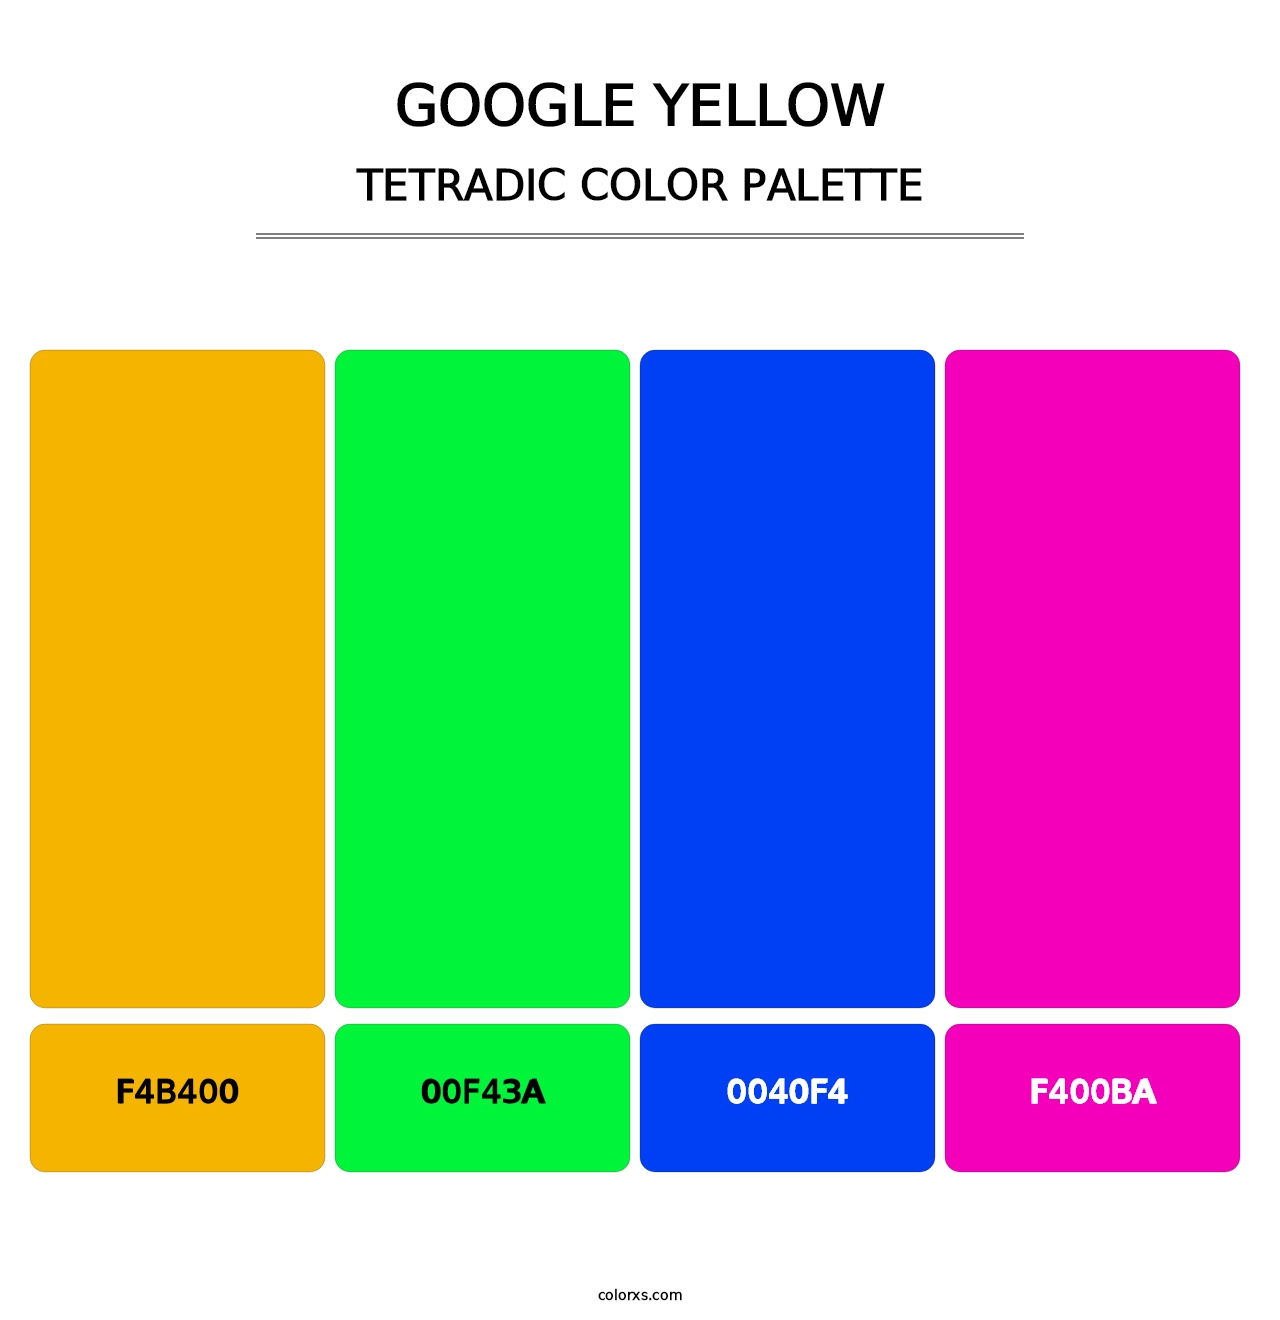 Google Yellow - Tetradic Color Palette